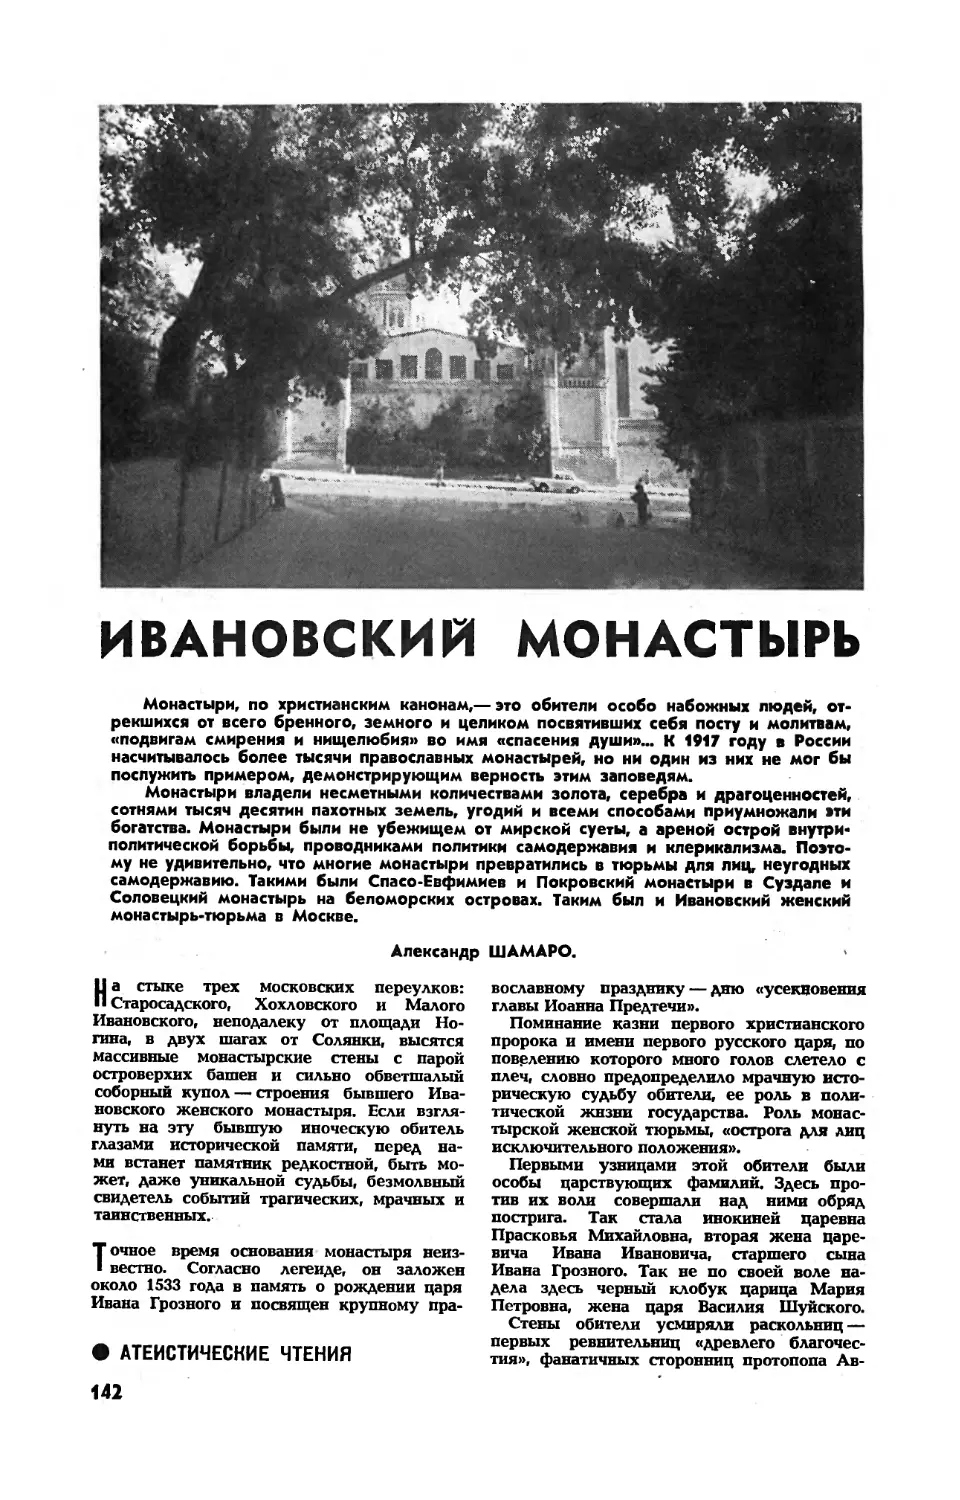 А. ШАМАРО — Ивановский монастырь